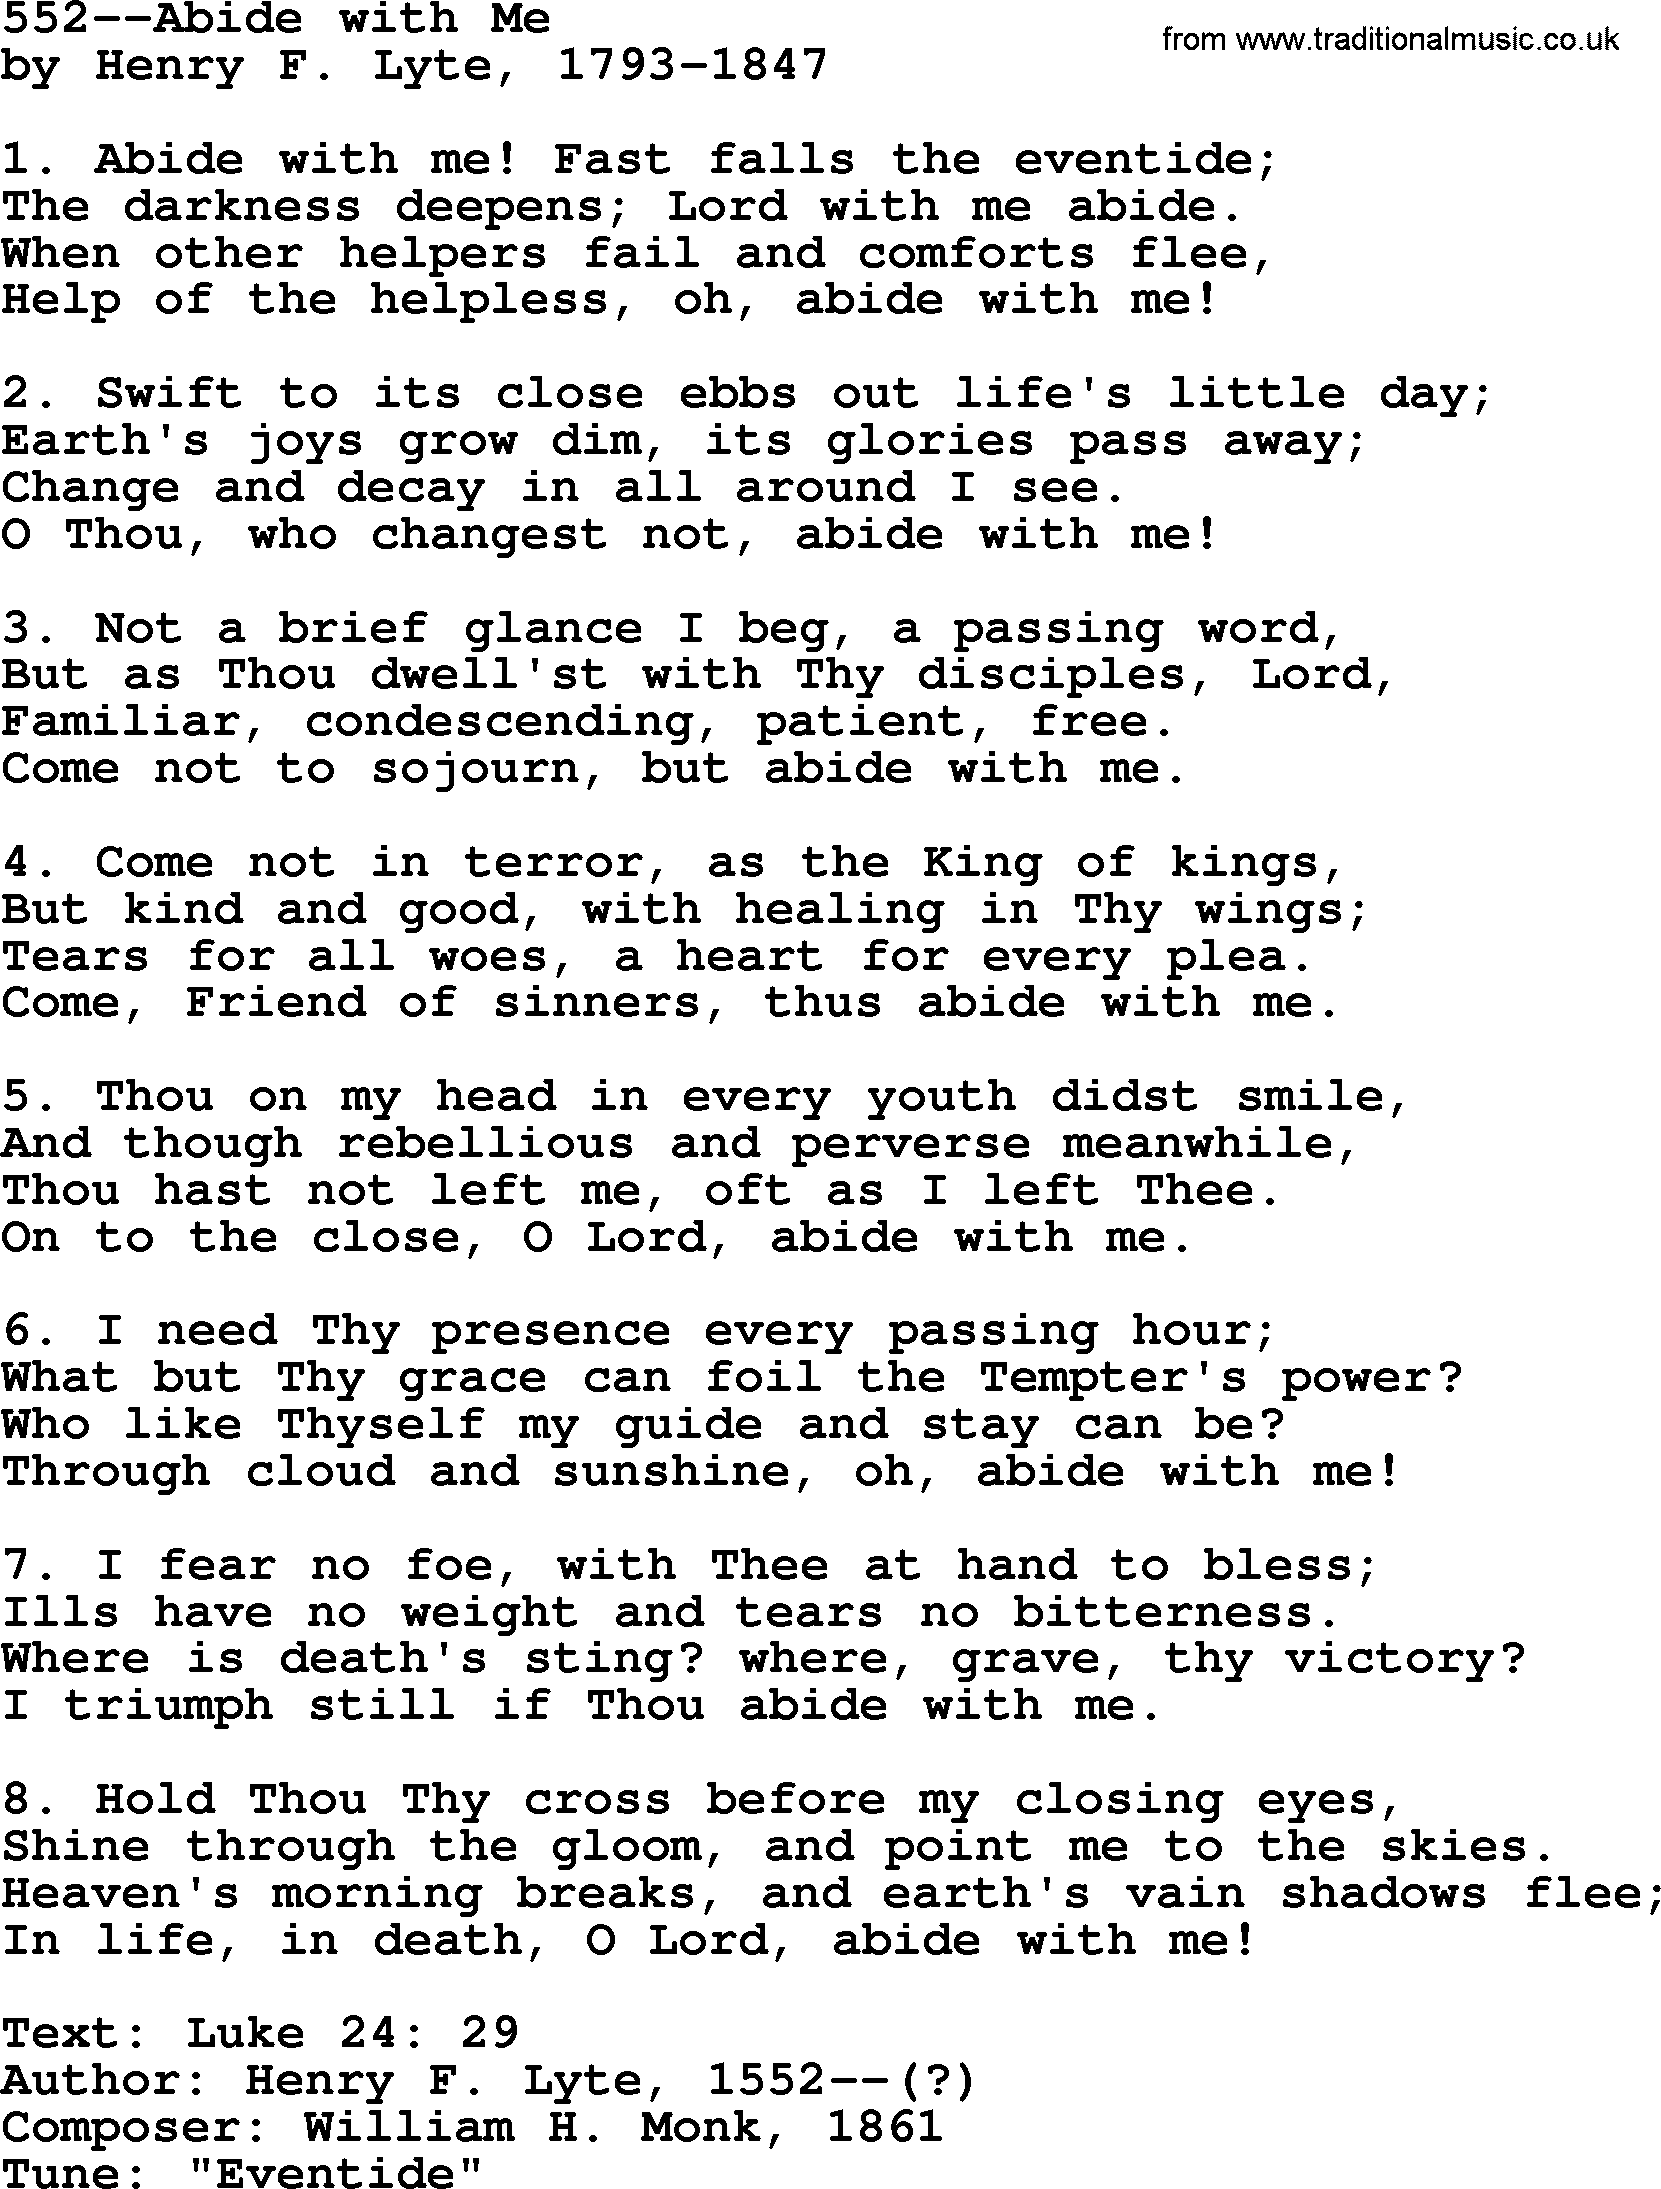 Lutheran Hymn: 552--Abide with Me.txt lyrics with PDF